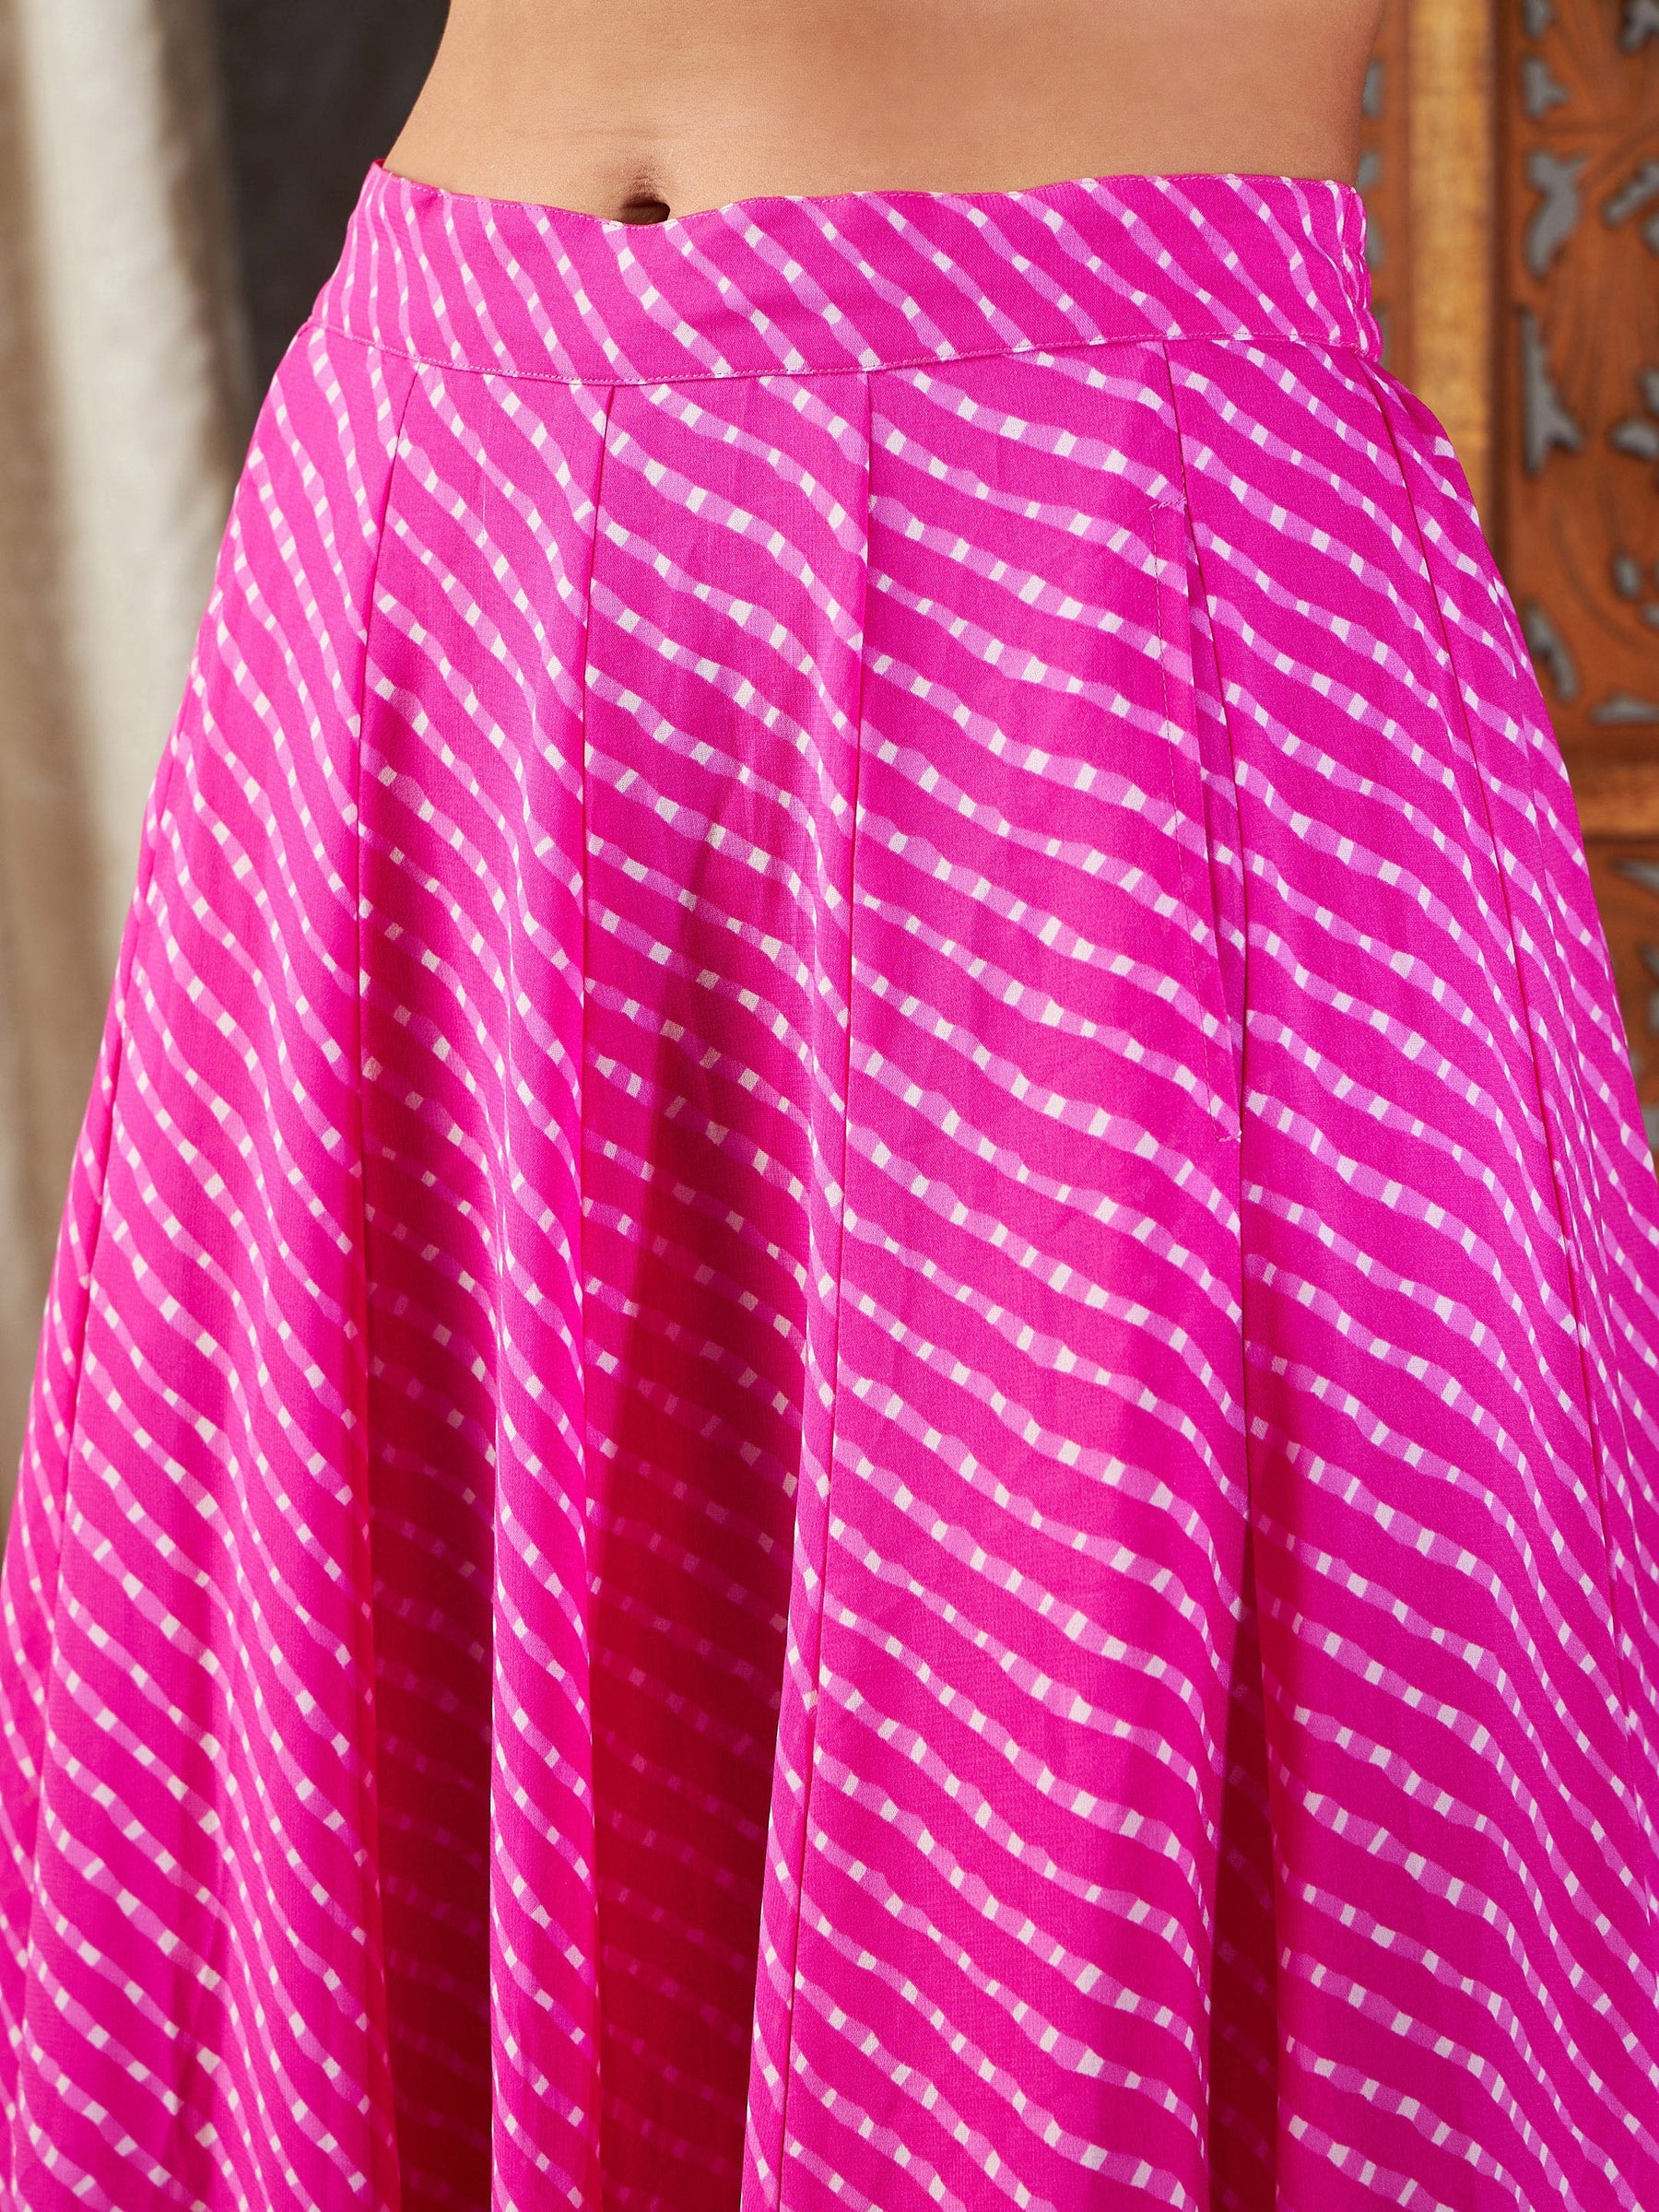 Pink Lehariya Off Shoulder Crop Top With Anarkali Skirt -Shae by SASSAFRAS